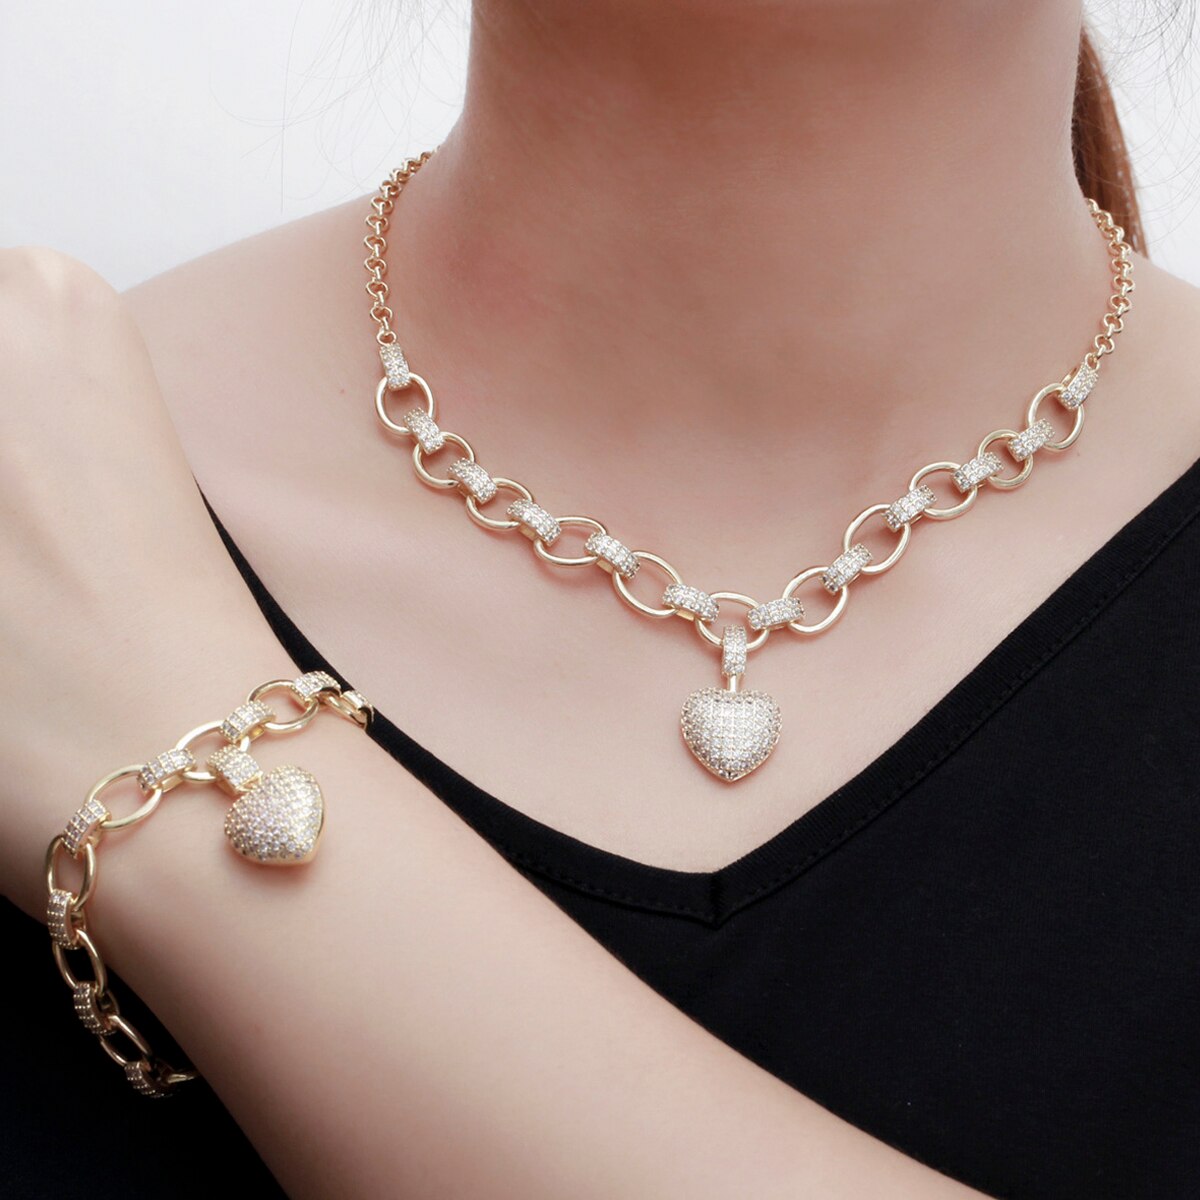 ThreeGraces-Luxury-Cubic-Zirconia-Stone-Yellow-Gold-Color-Love-Heart-Pendant-Necklace-Bracelet-Set-f-1005003297996366-4